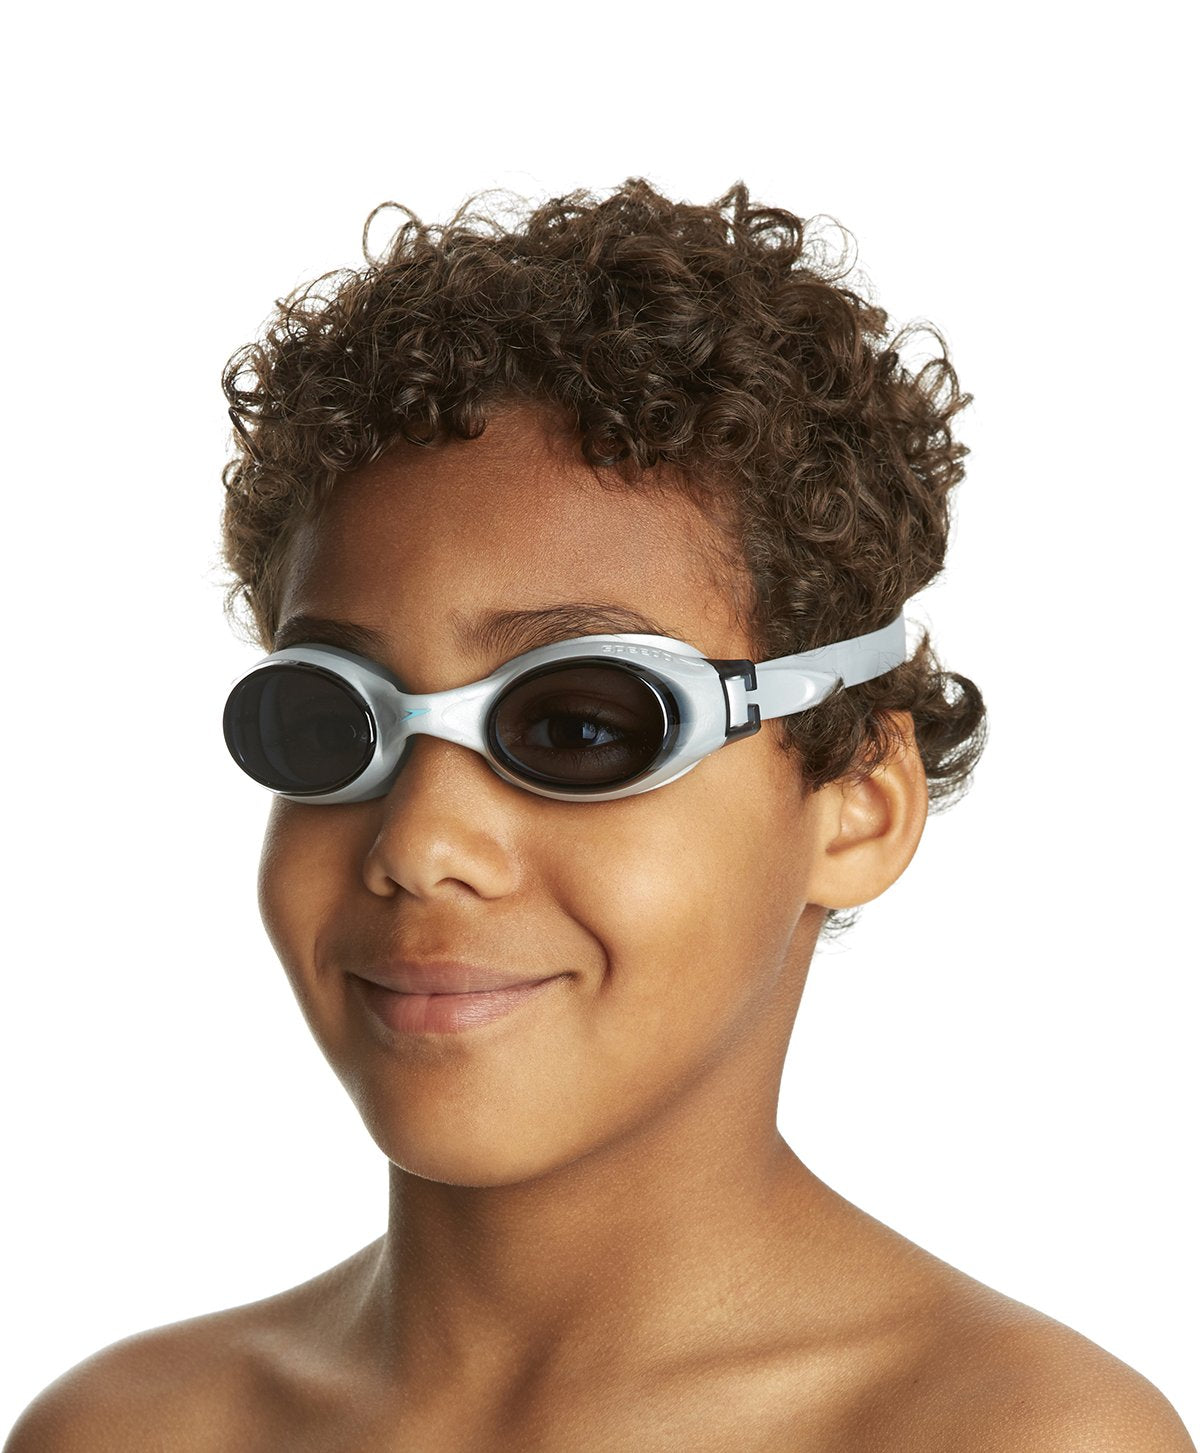 Speedo Unisex - Junior Rapid Goggles - Best Price online Prokicksports.com